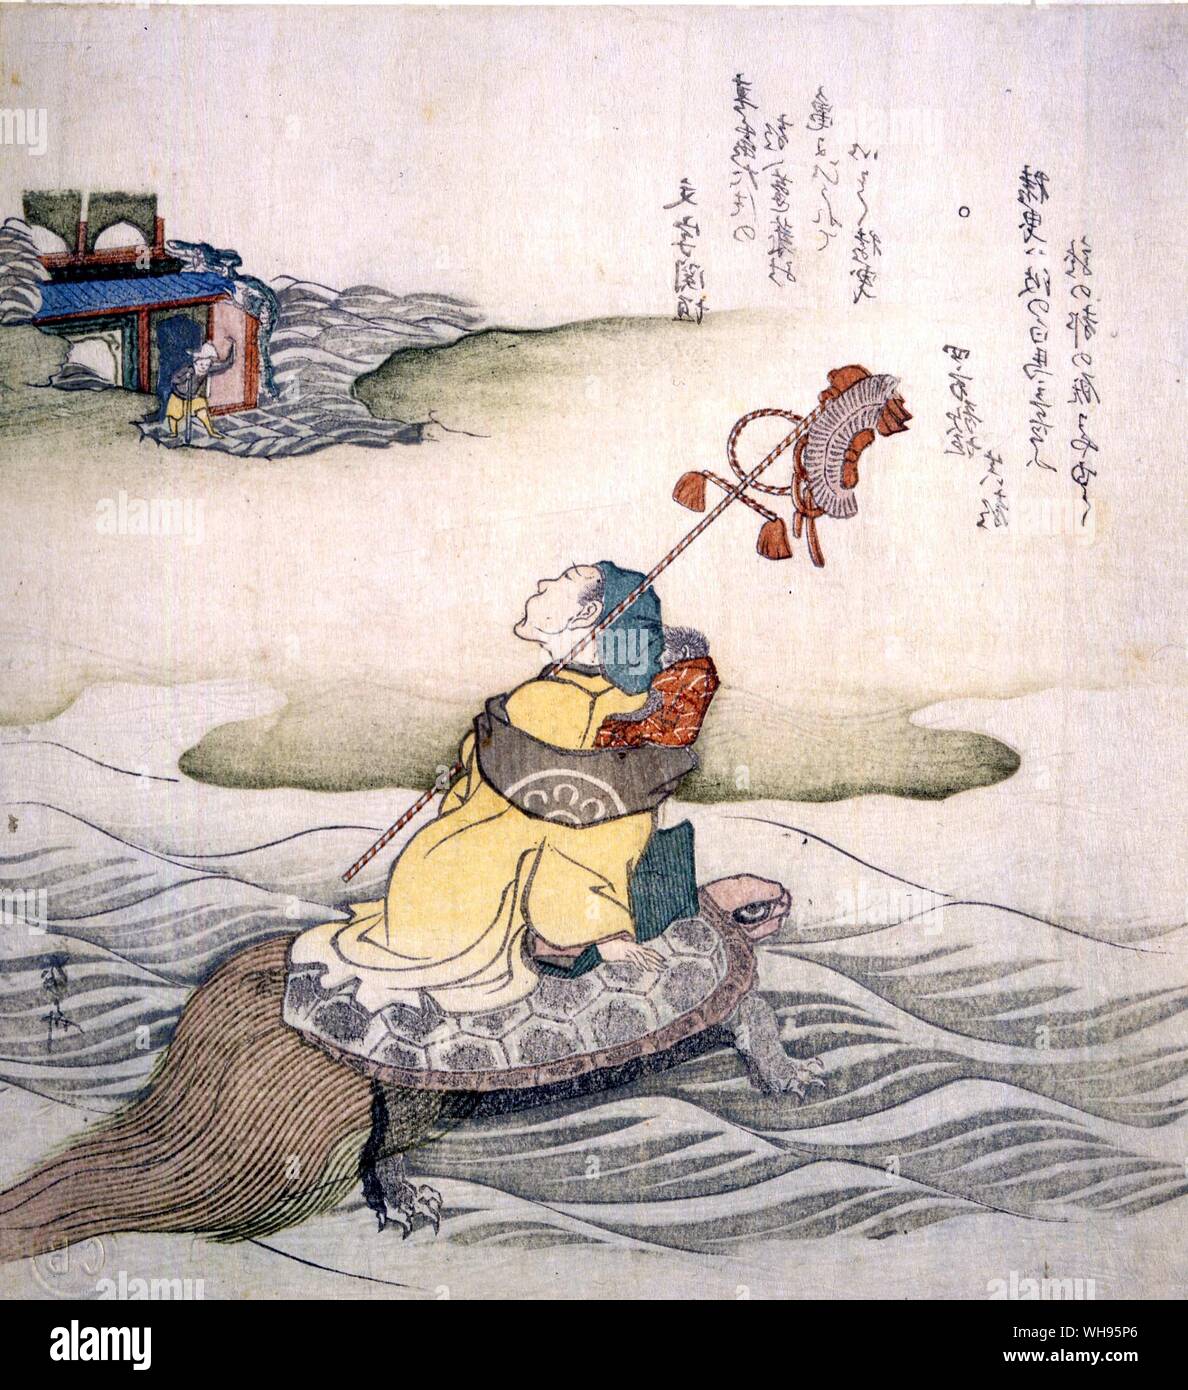 Art - Japanese - graphic. Urashima Taro on a turtle on his underwater journey by Shinsai, c.1870.. . Stock Photo